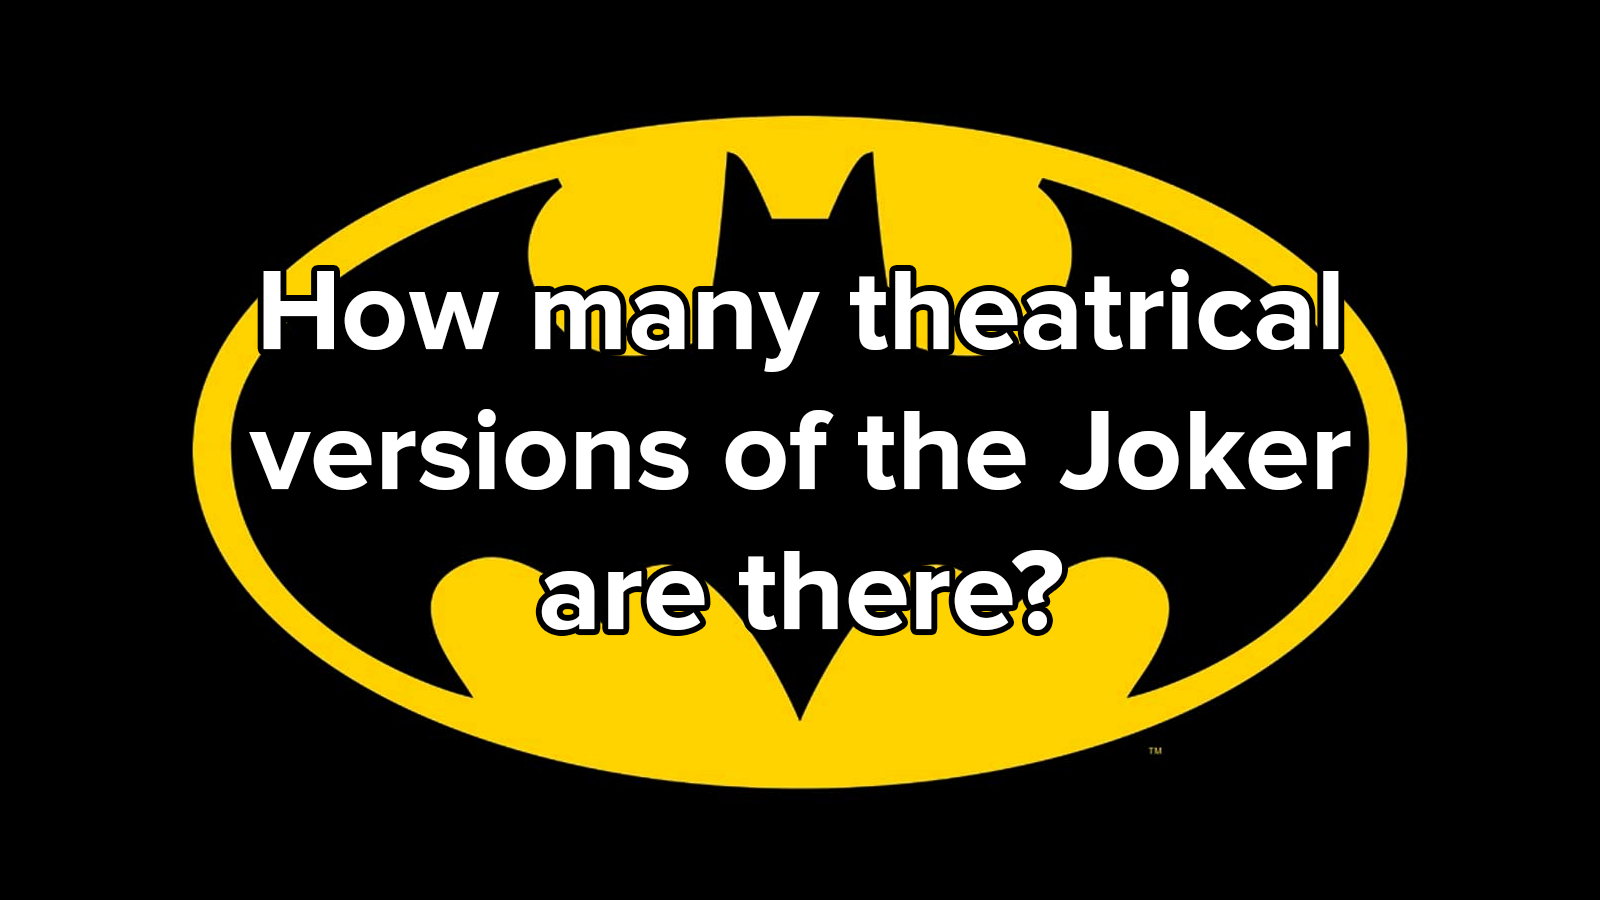 The Daily Crate | EDUCRATED QUIZ: Batman Trivia